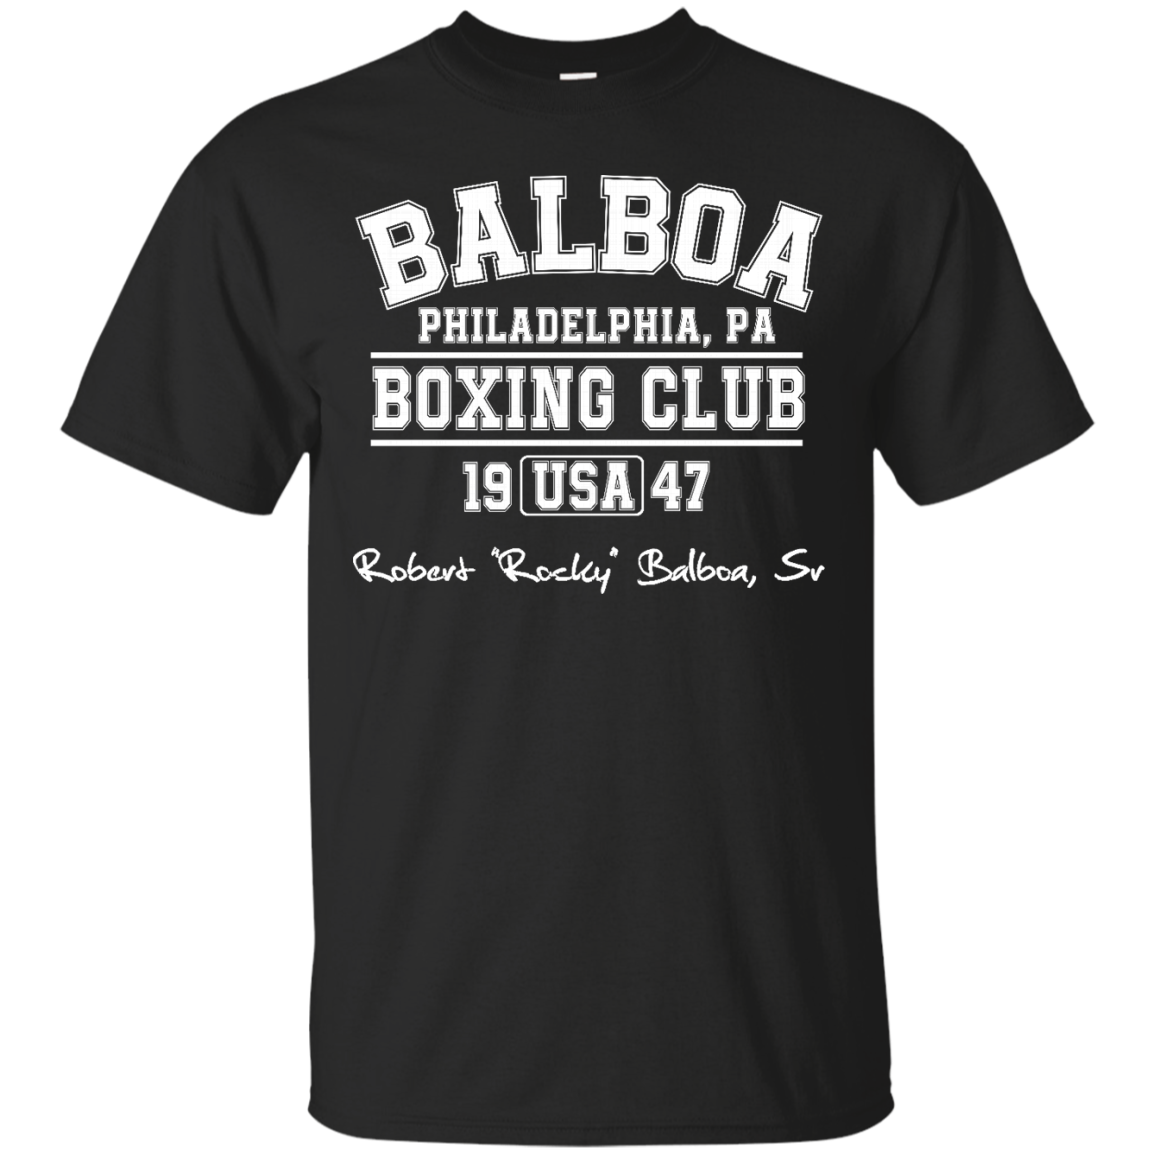 Rocky Balboa Shirts Philadelphia PA Boxing Club - Teesmiley